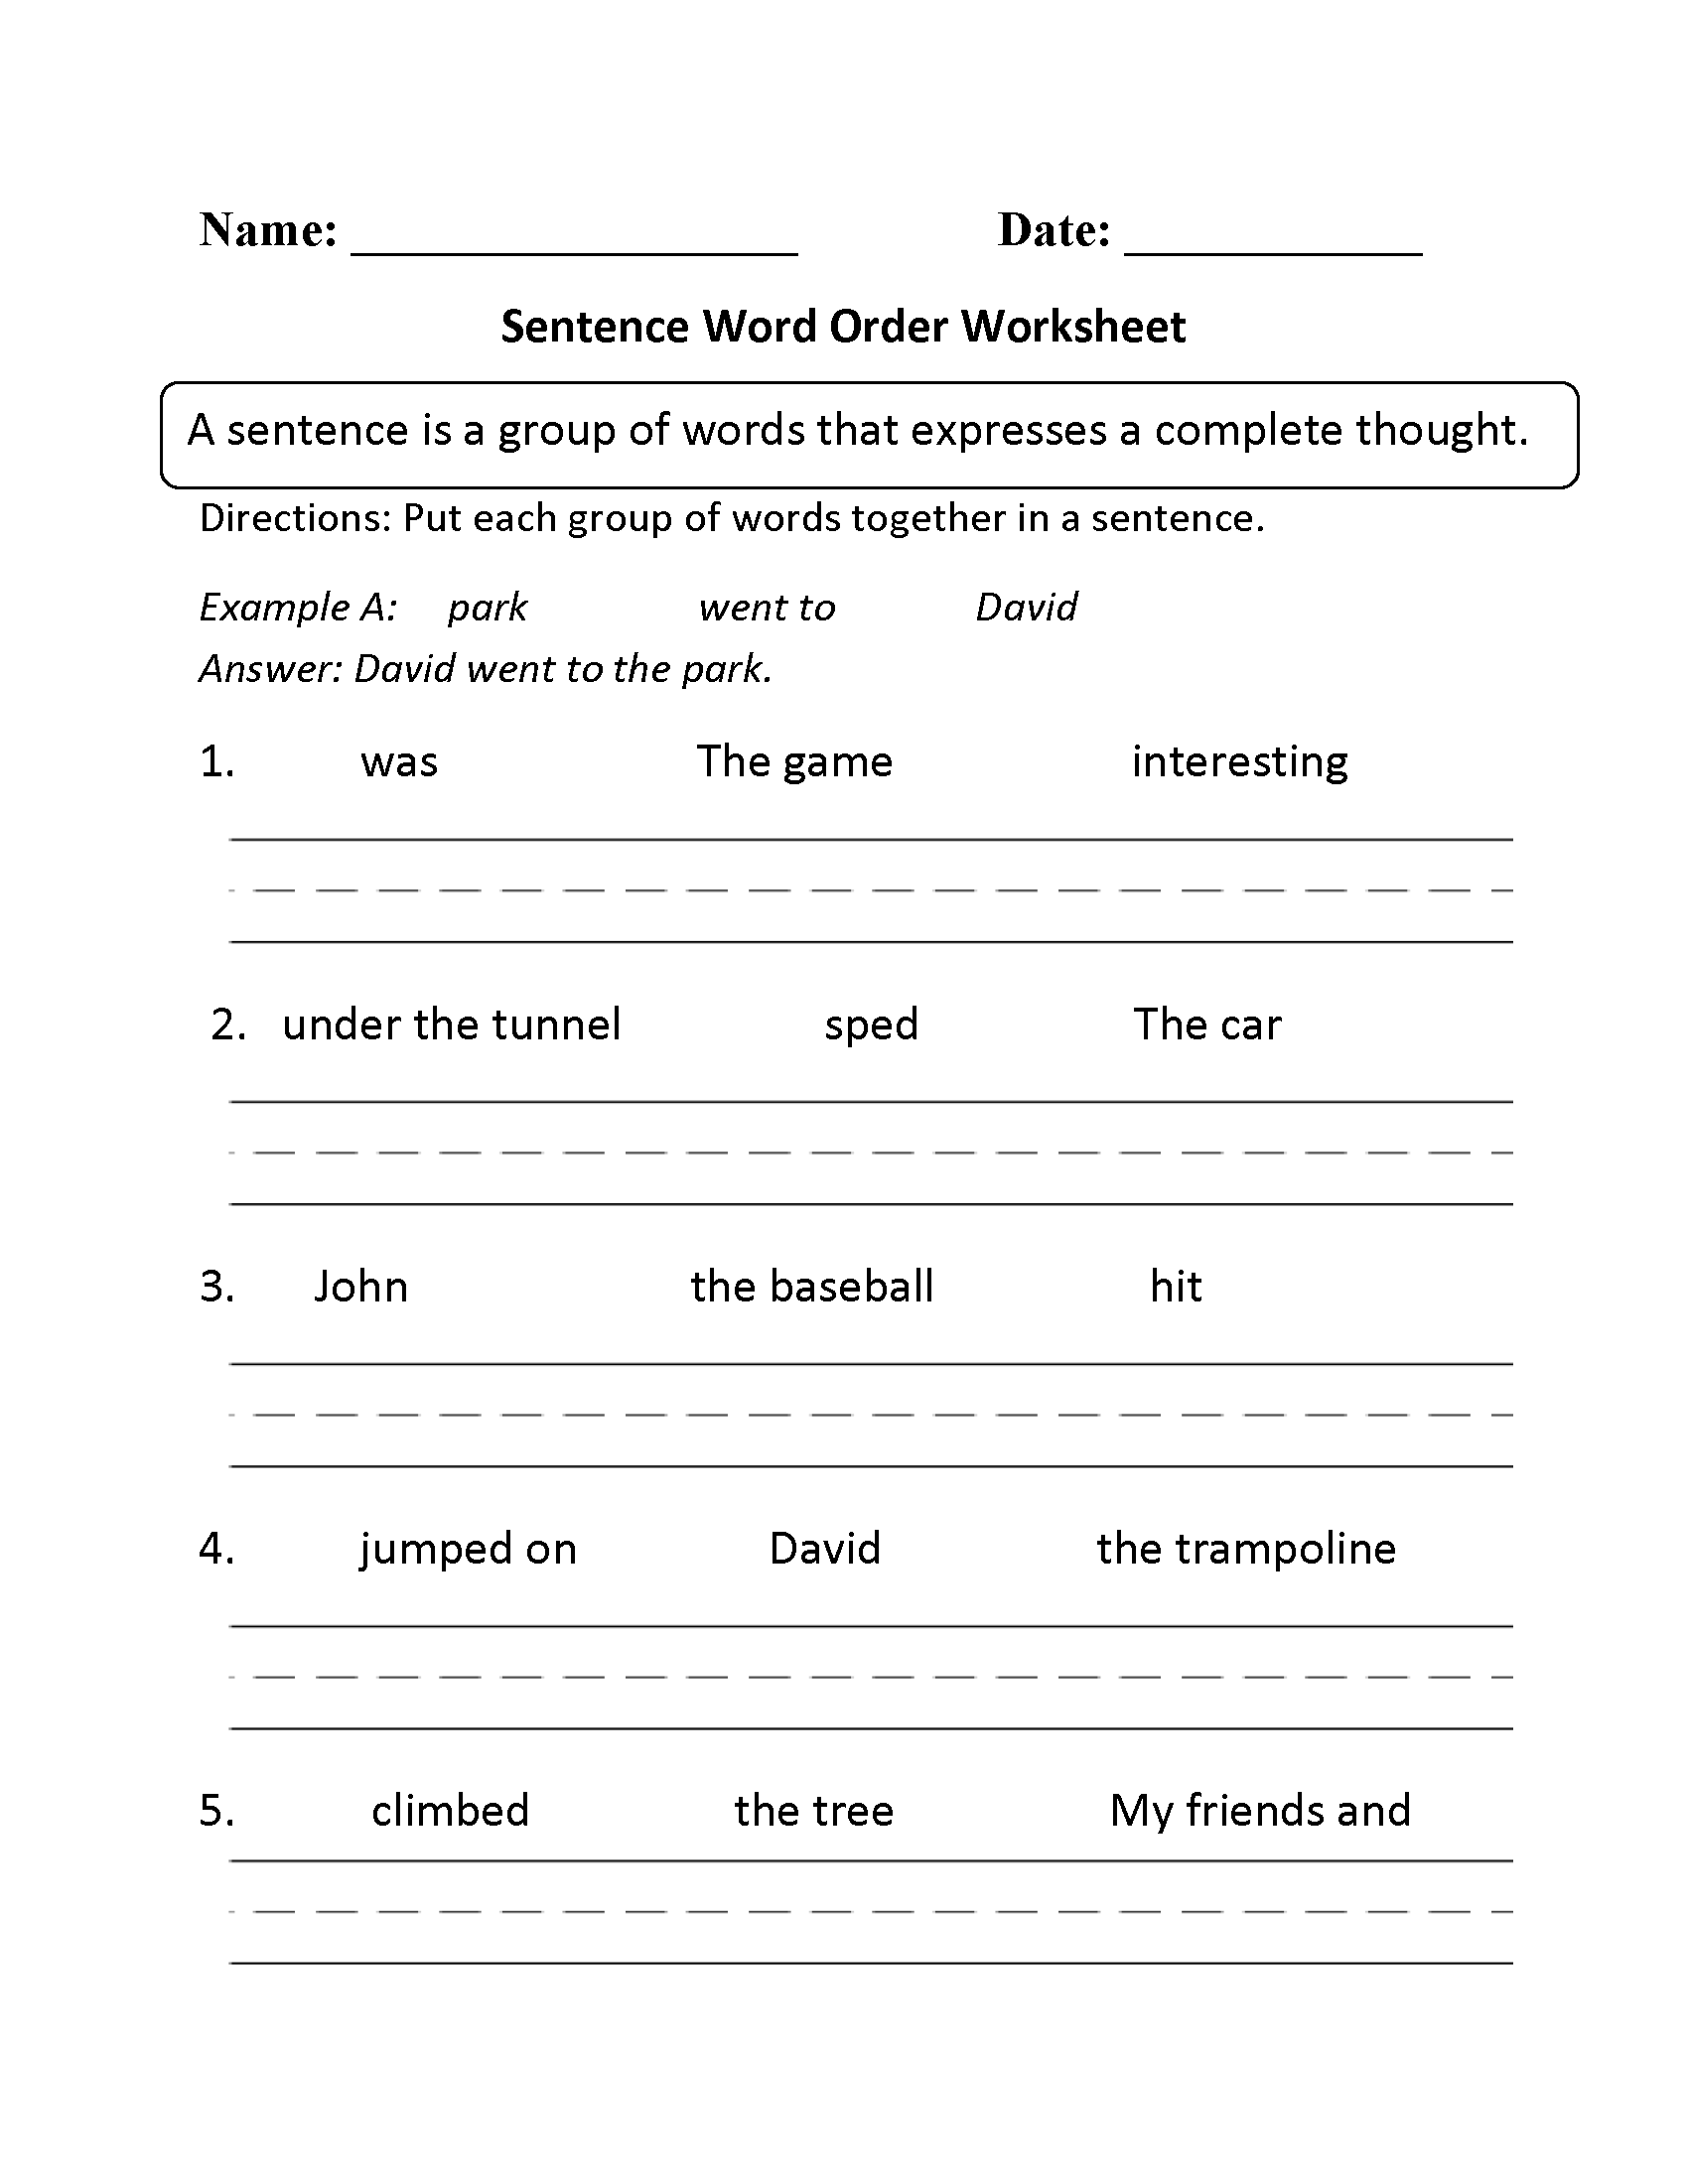 sentence word order worksheets_86311